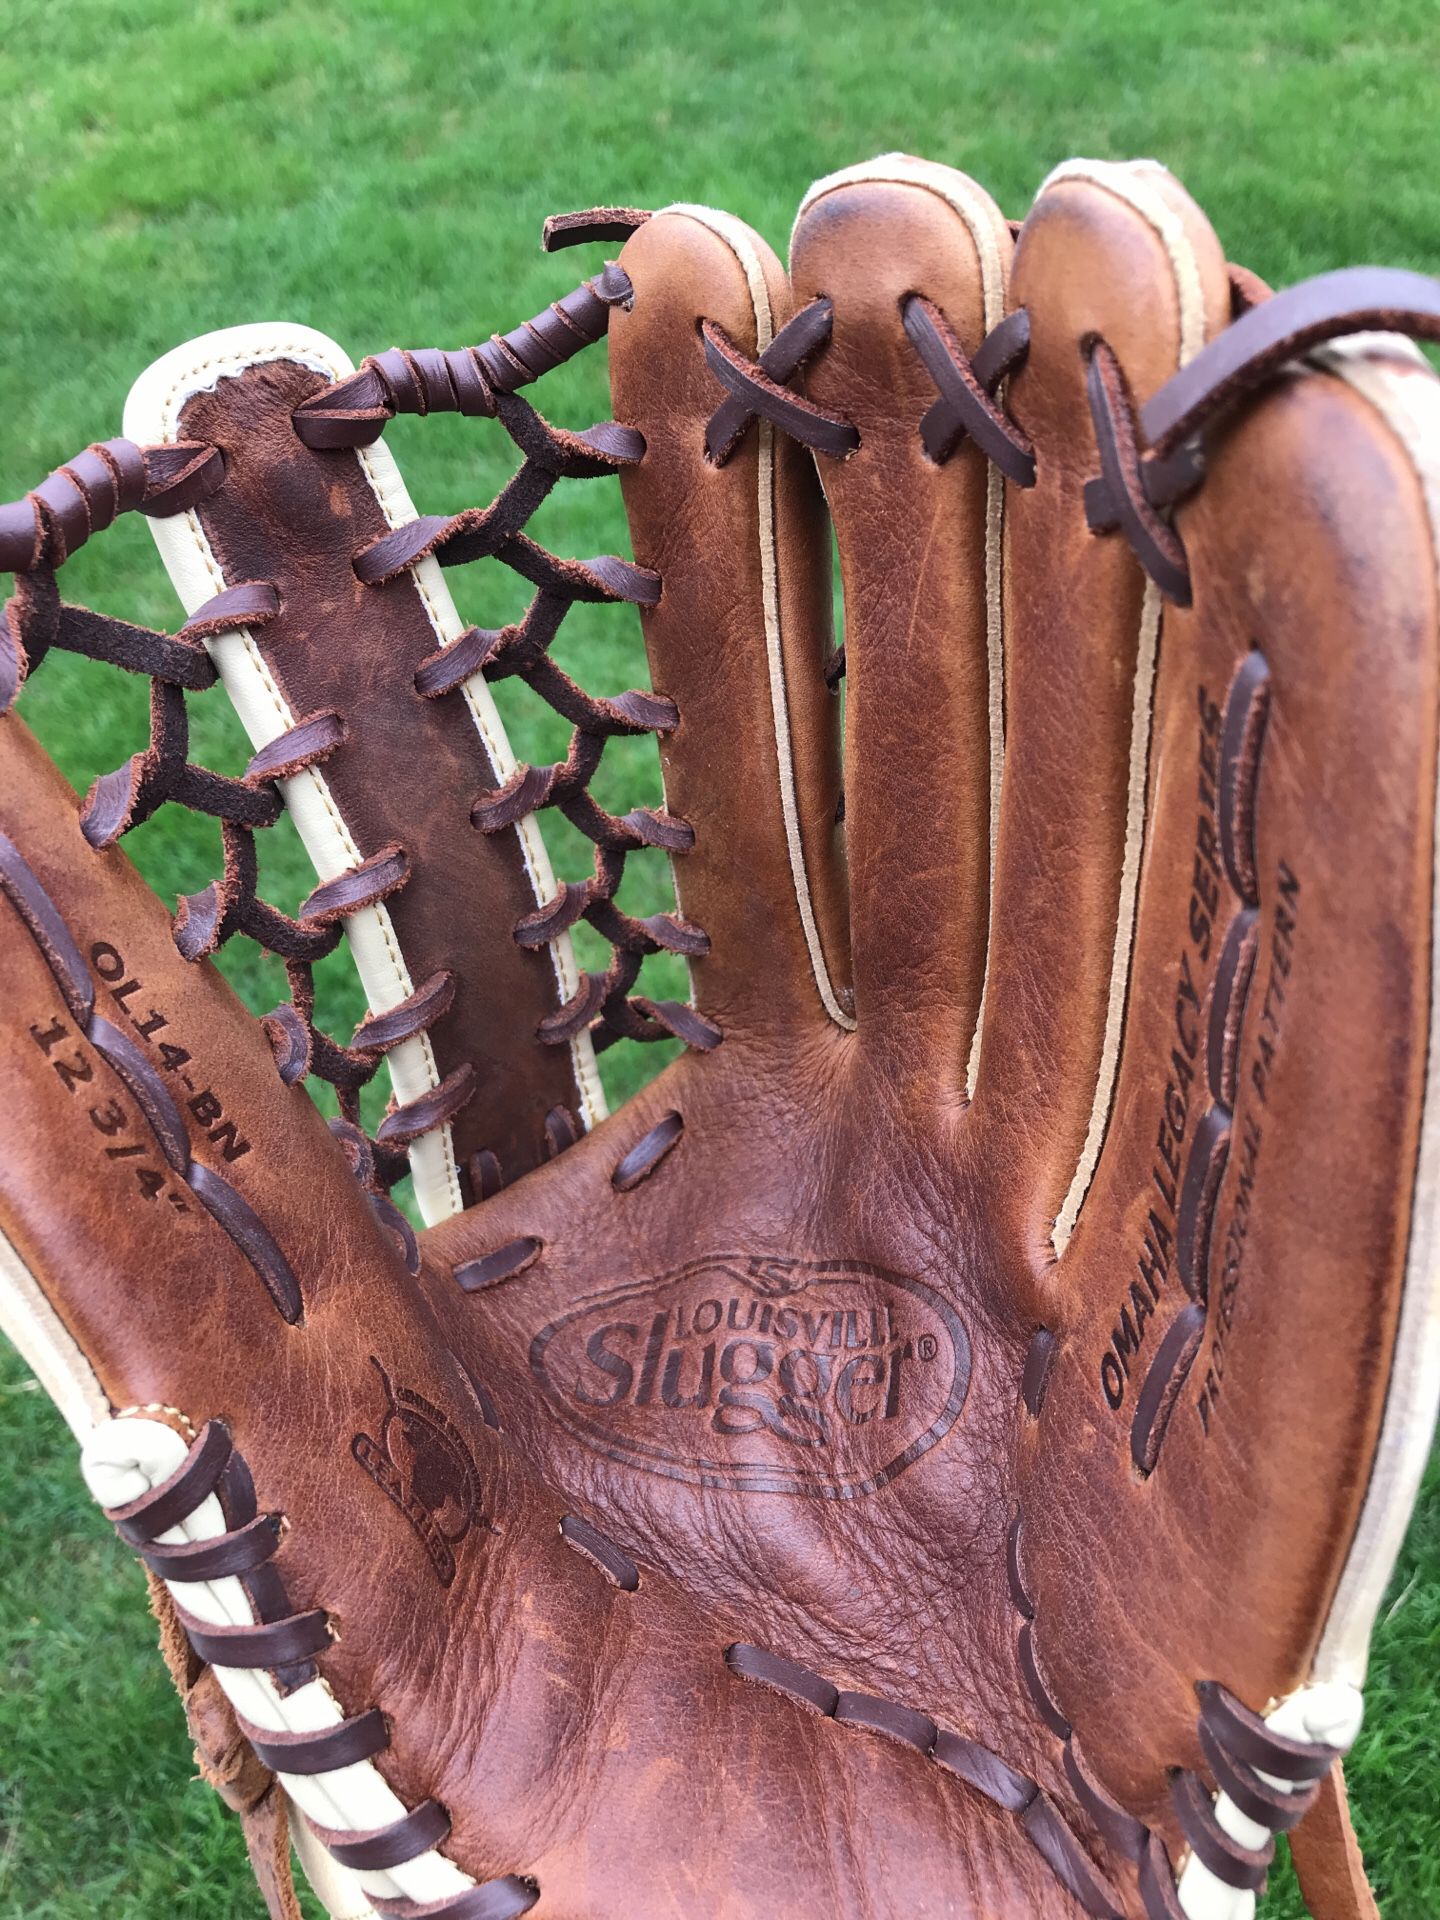 Louisville Slugger Omaha Legacy series 12 3/4 inch baseball / Softball glove mitt